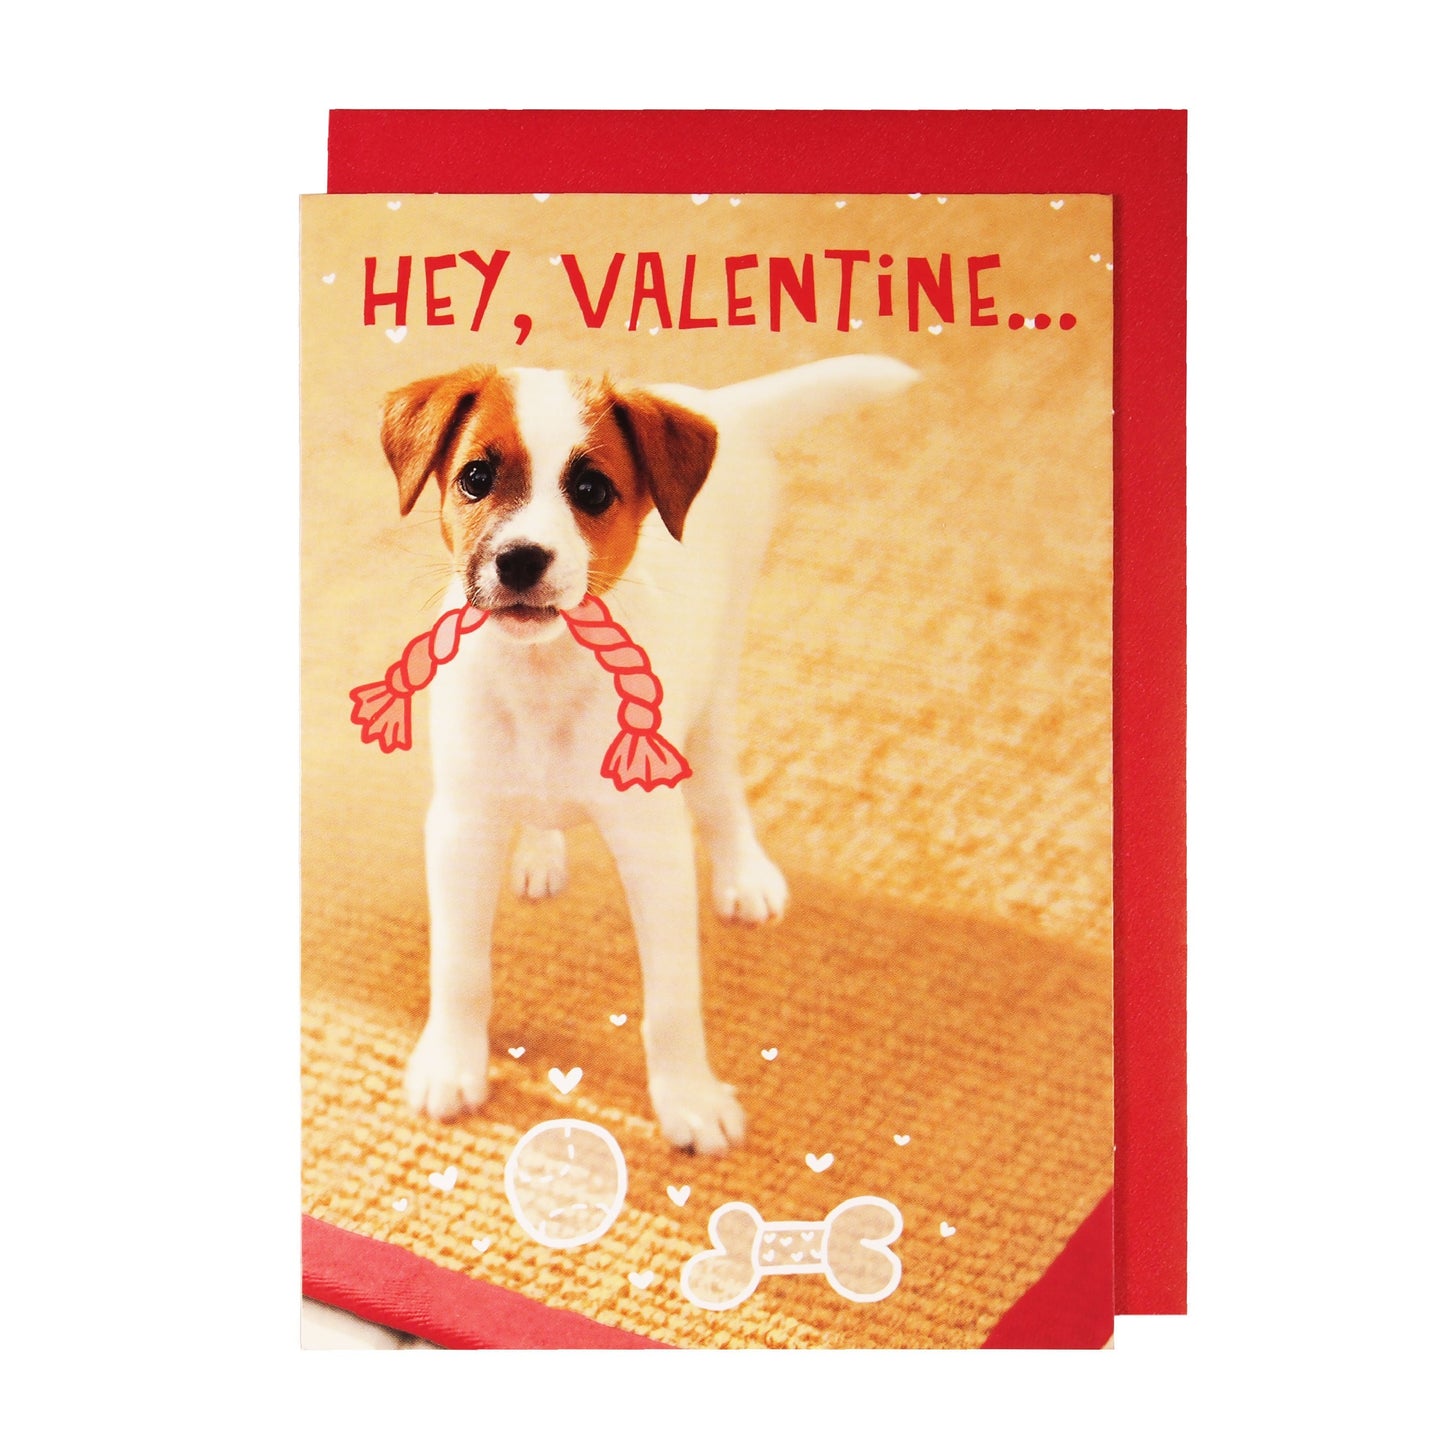 Valentine's Day Card : "Hey Valentine ..." - Jack Russell